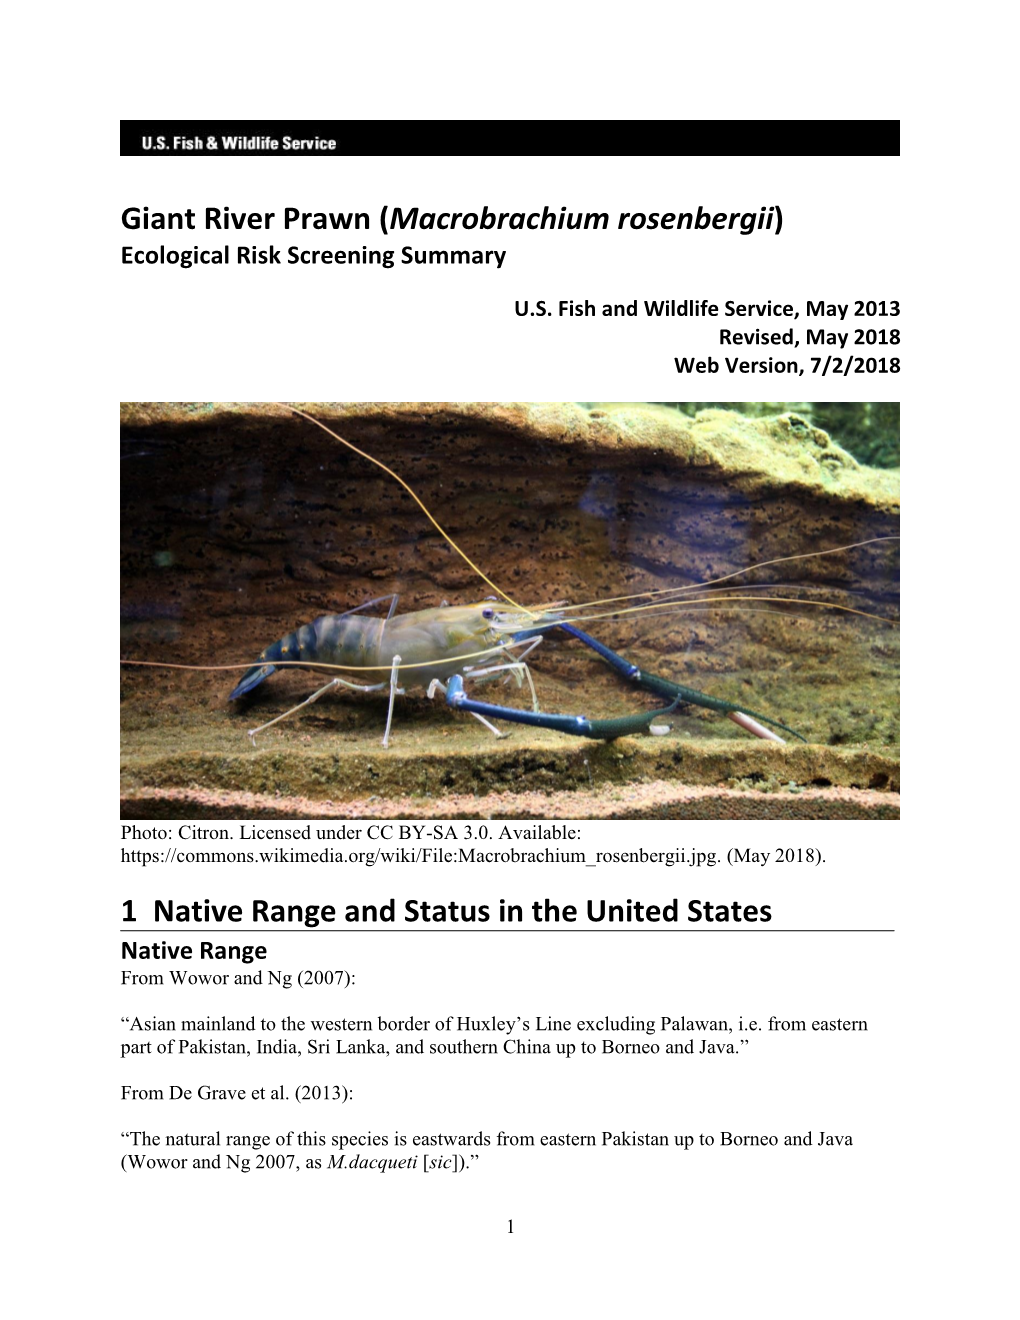 Giant River Prawn (Macrobrachium Rosenbergii) Ecological Risk Screening Summary